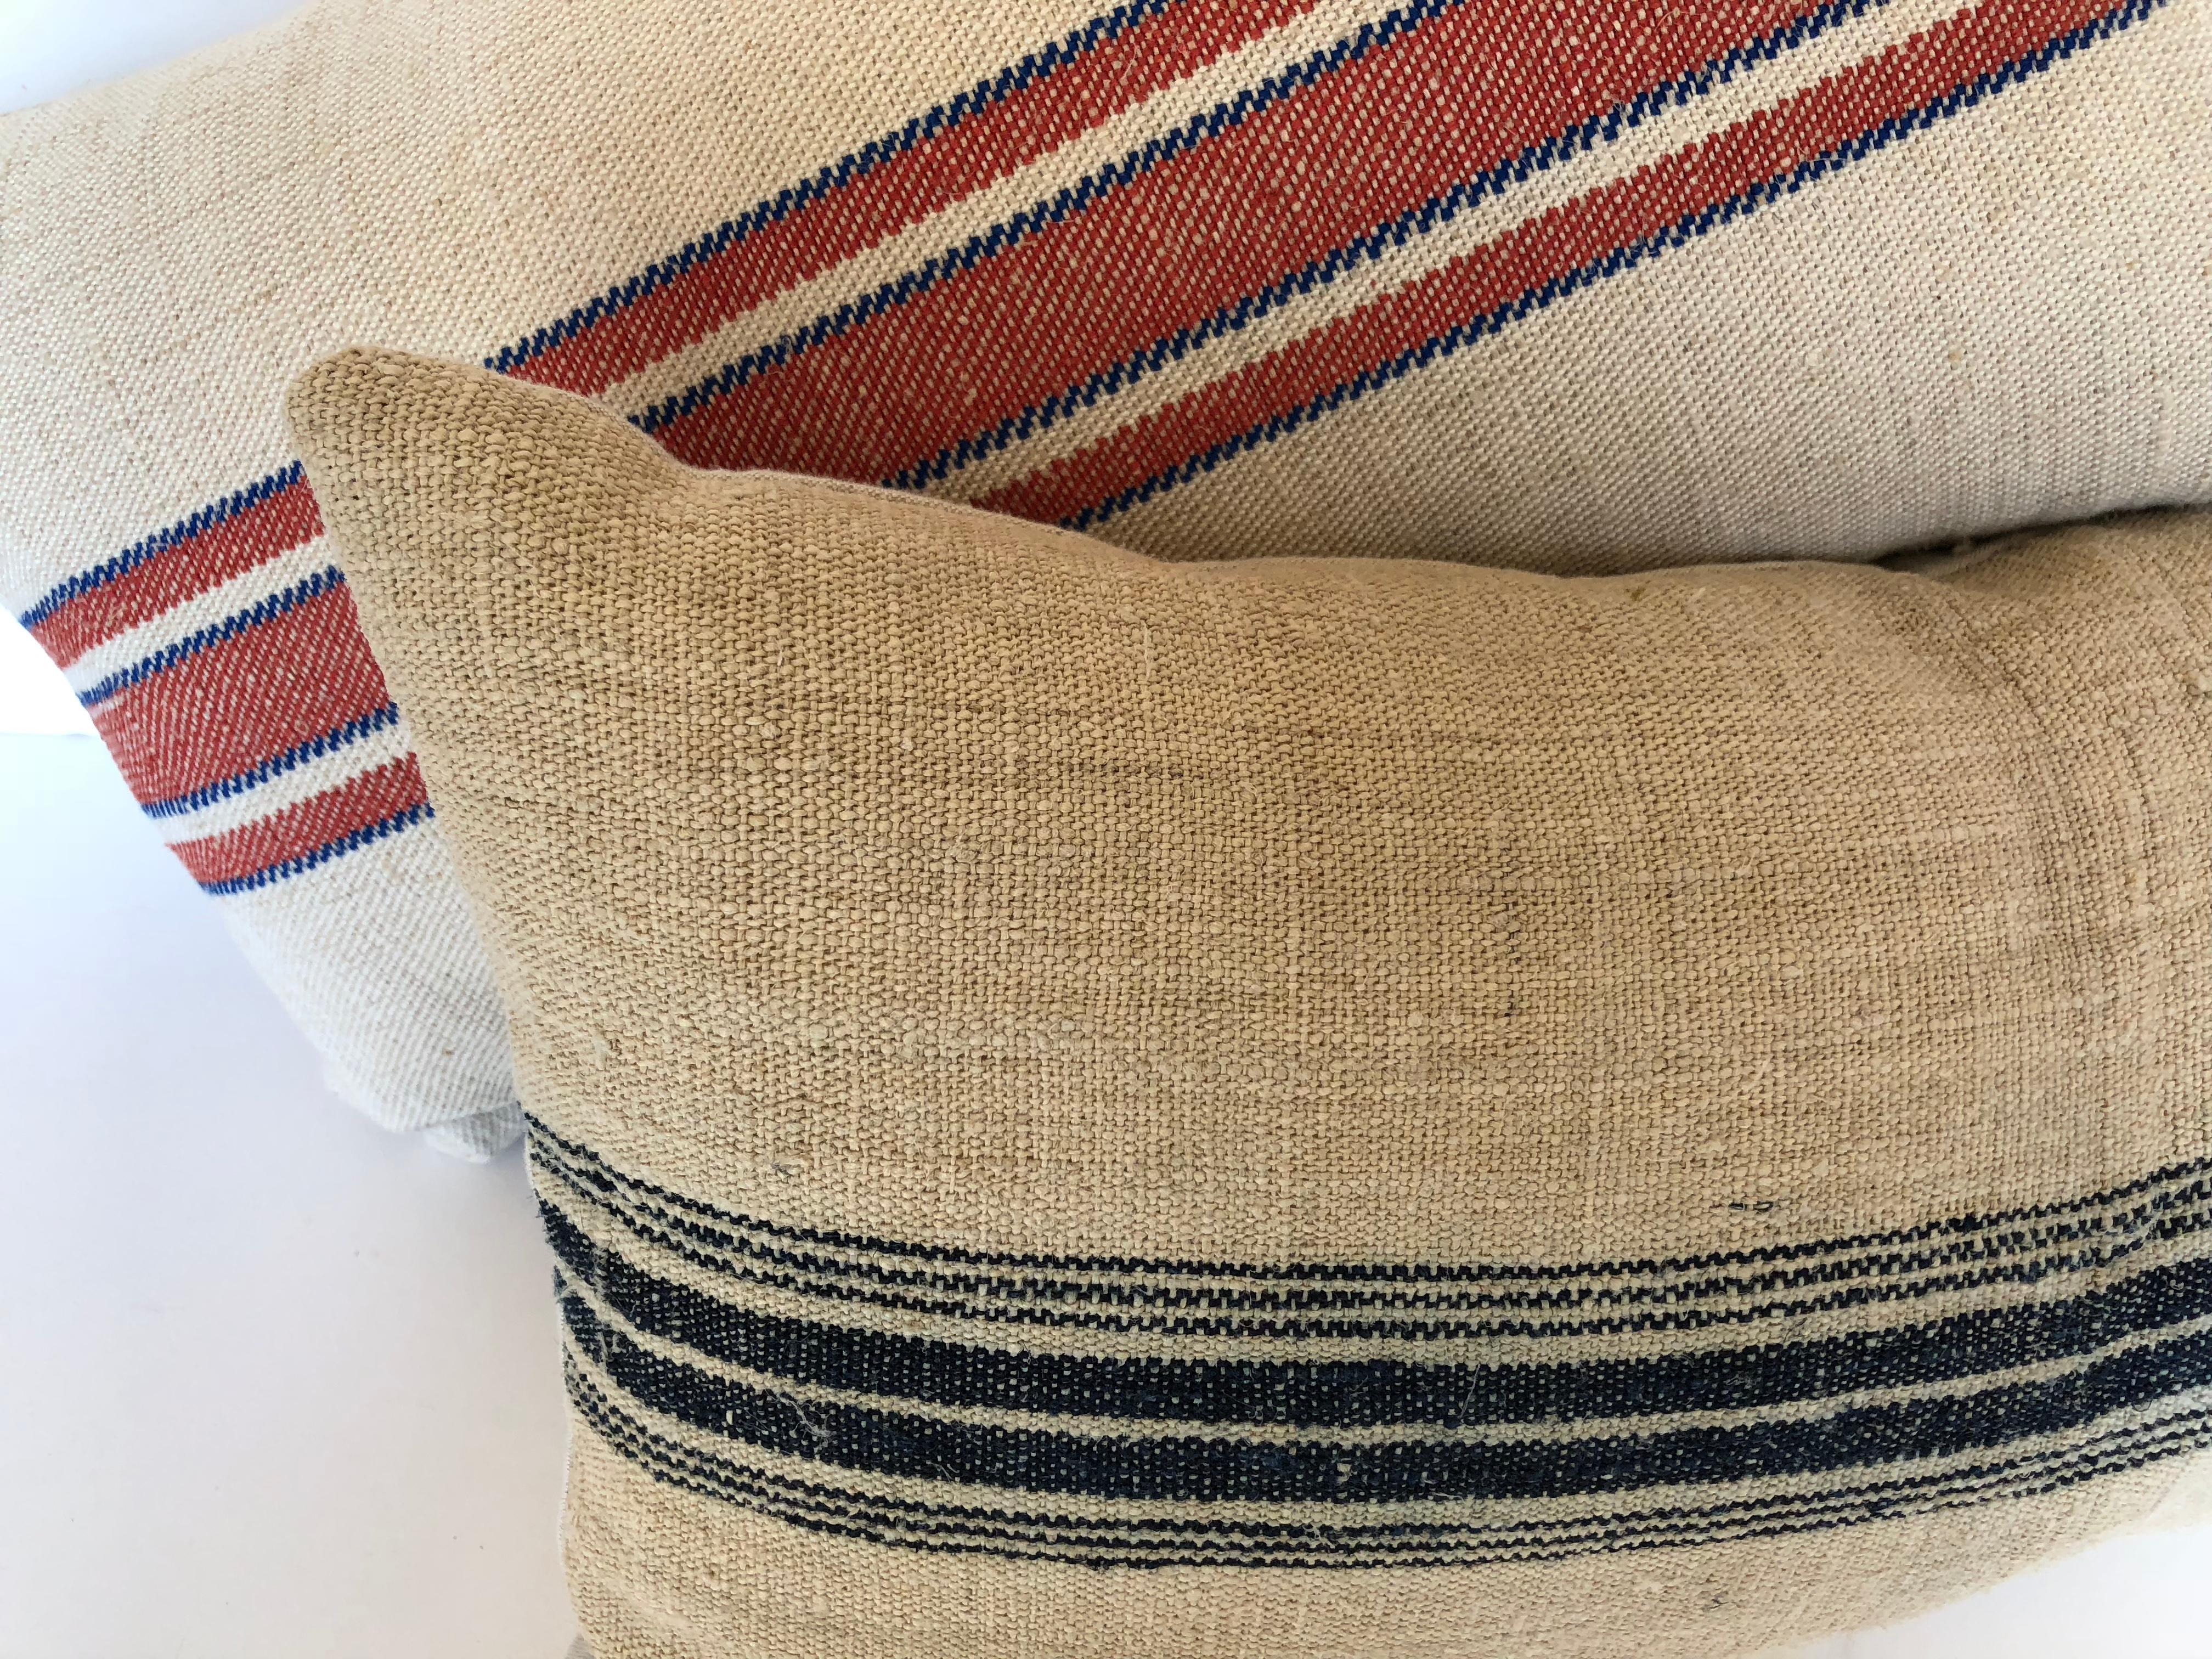 Custom Pillows Cut from a Vintage Handloomed Hemp and Linen German Grainsack For Sale 1